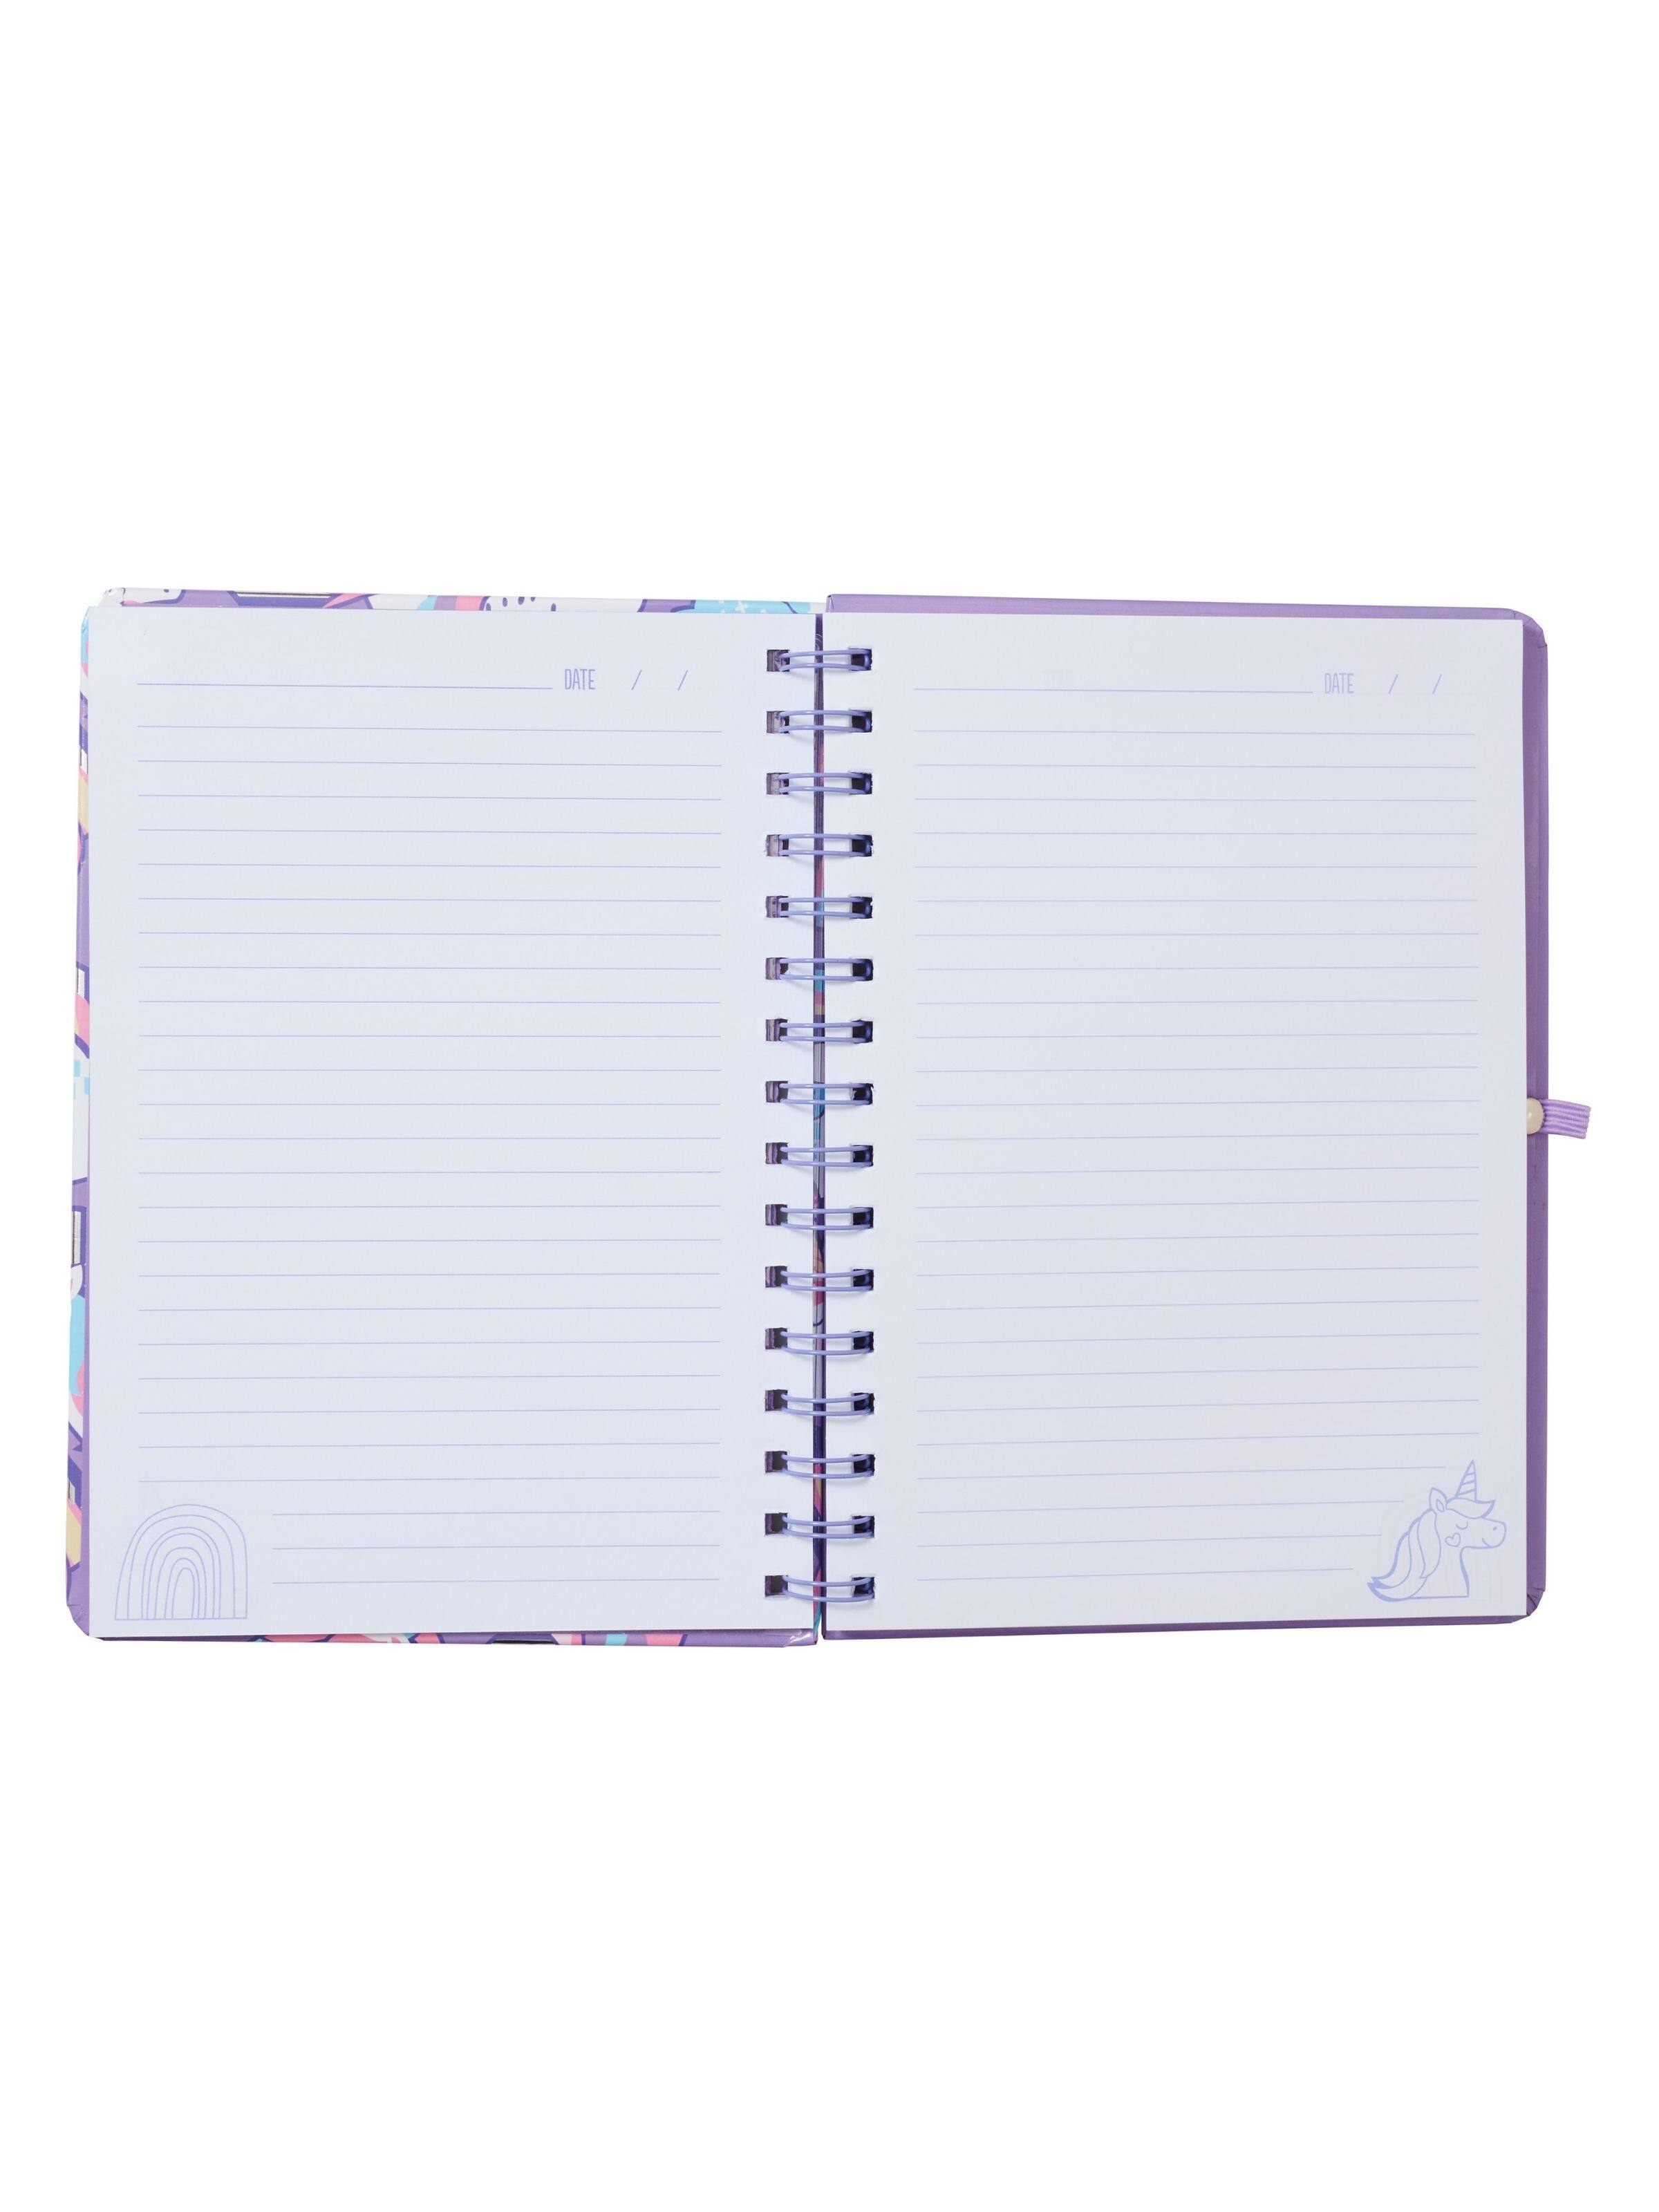 Shine A5 Spiral Notebook